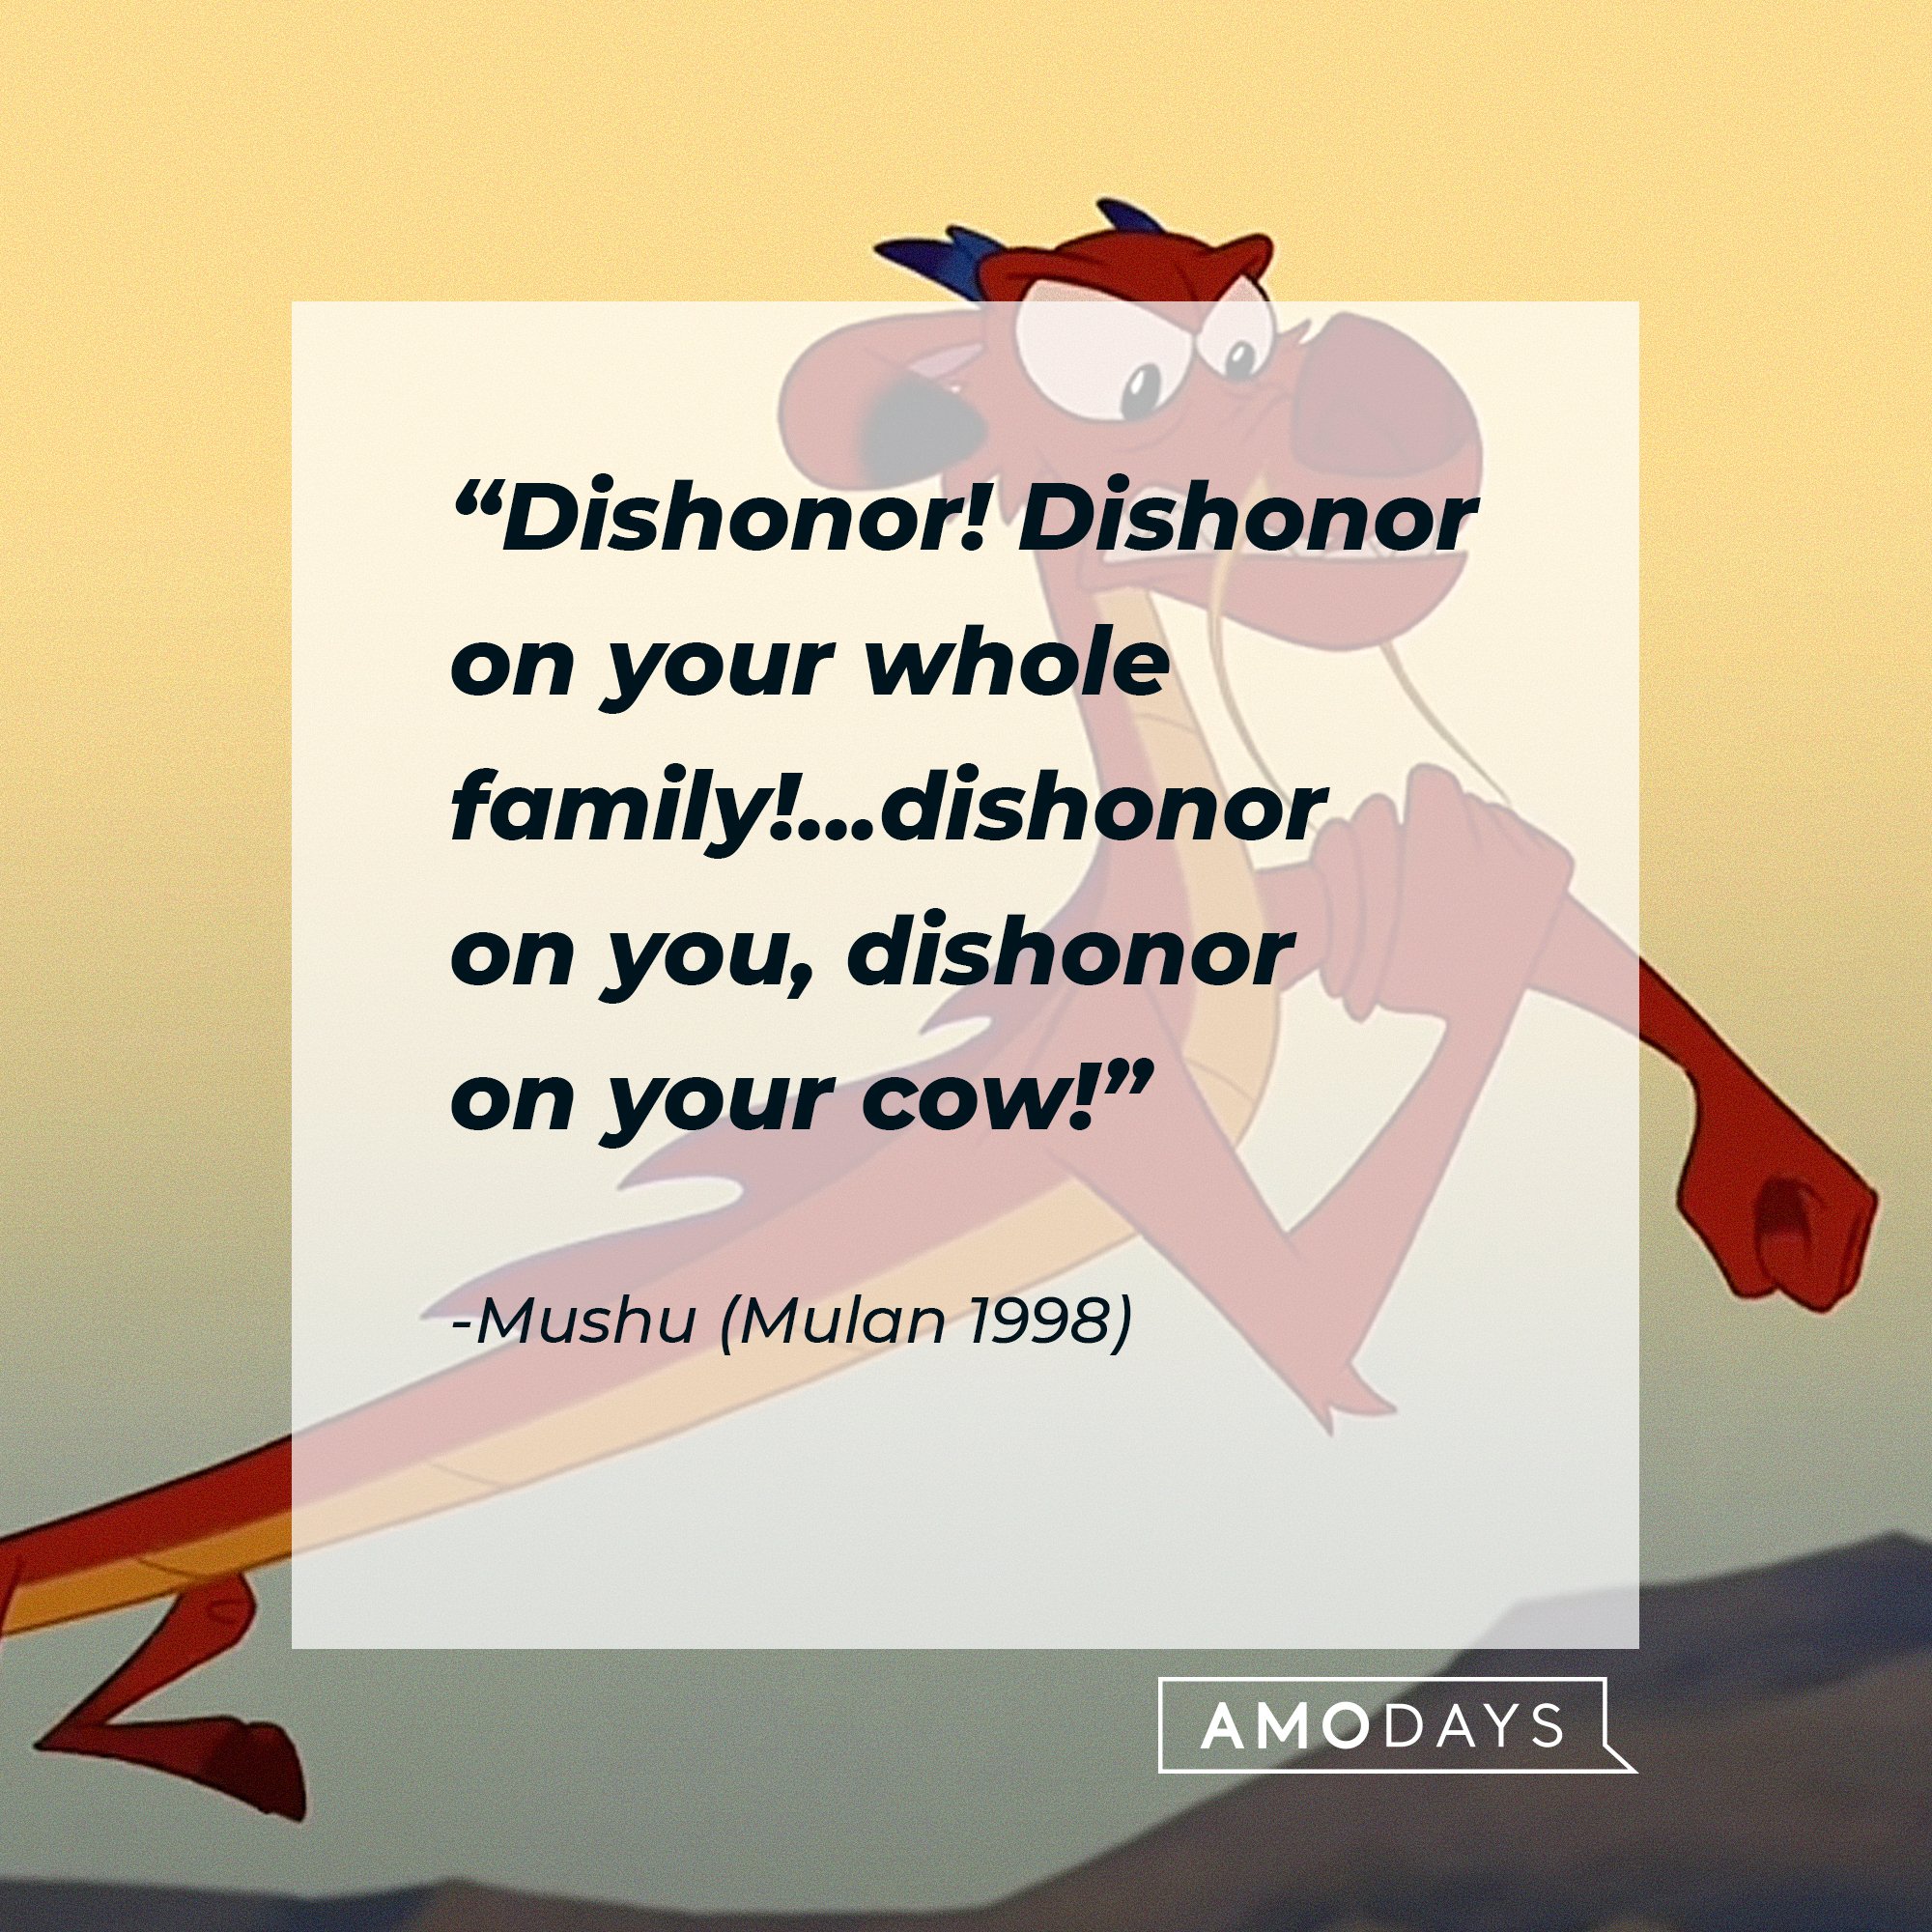  Mushu’s quote: “Dishonor! Dishonor on your whole family…dishonor on you, dishonor on your cow.”|  Image: AmoDays